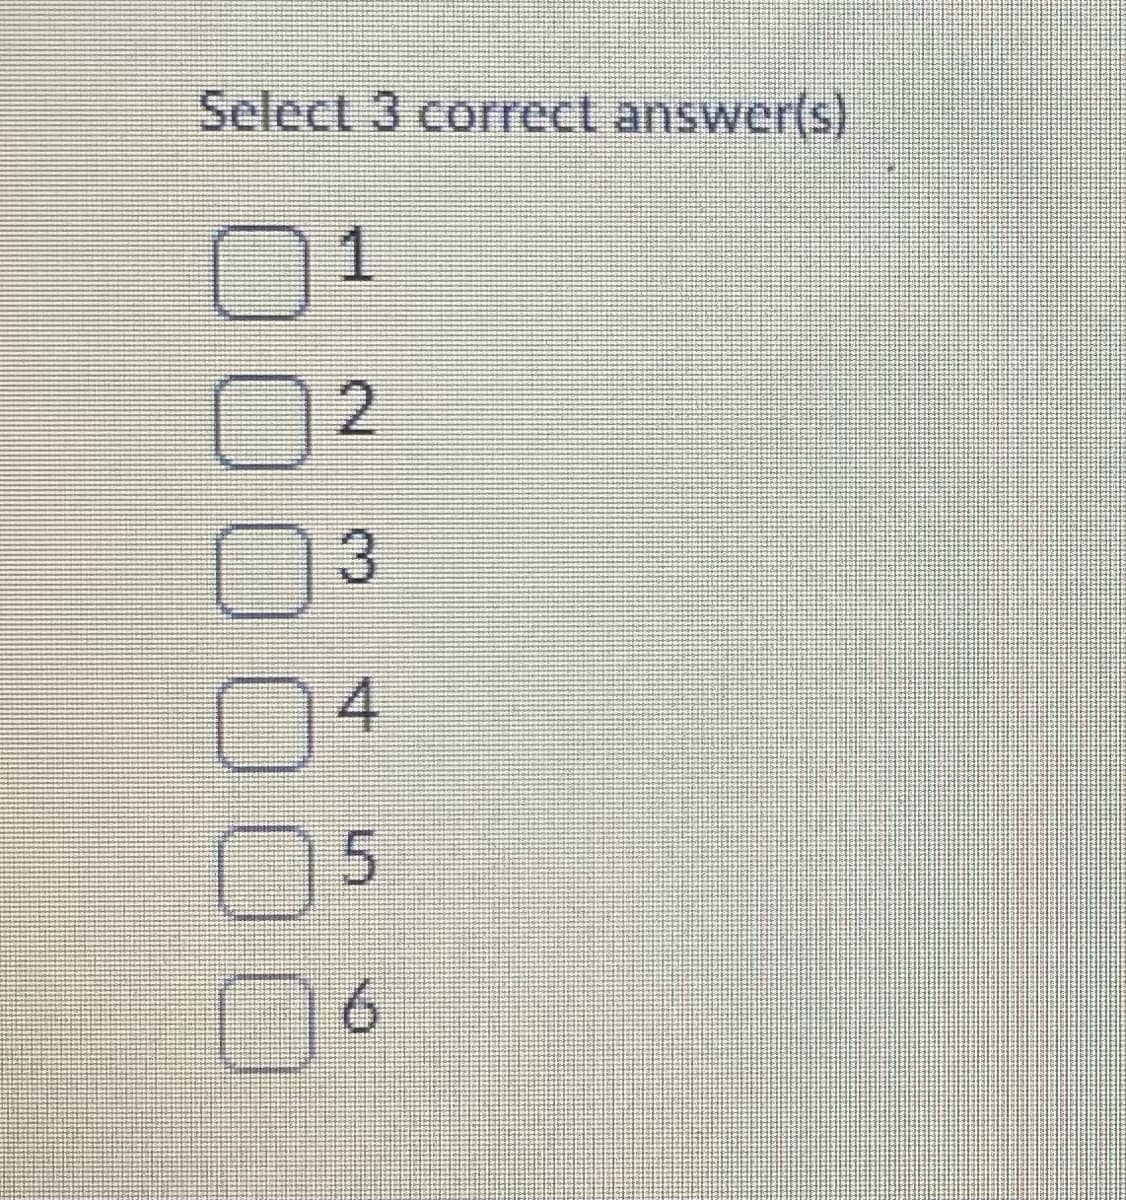 Select 3 correct answer(s)
0¹
02
03
04
05
06